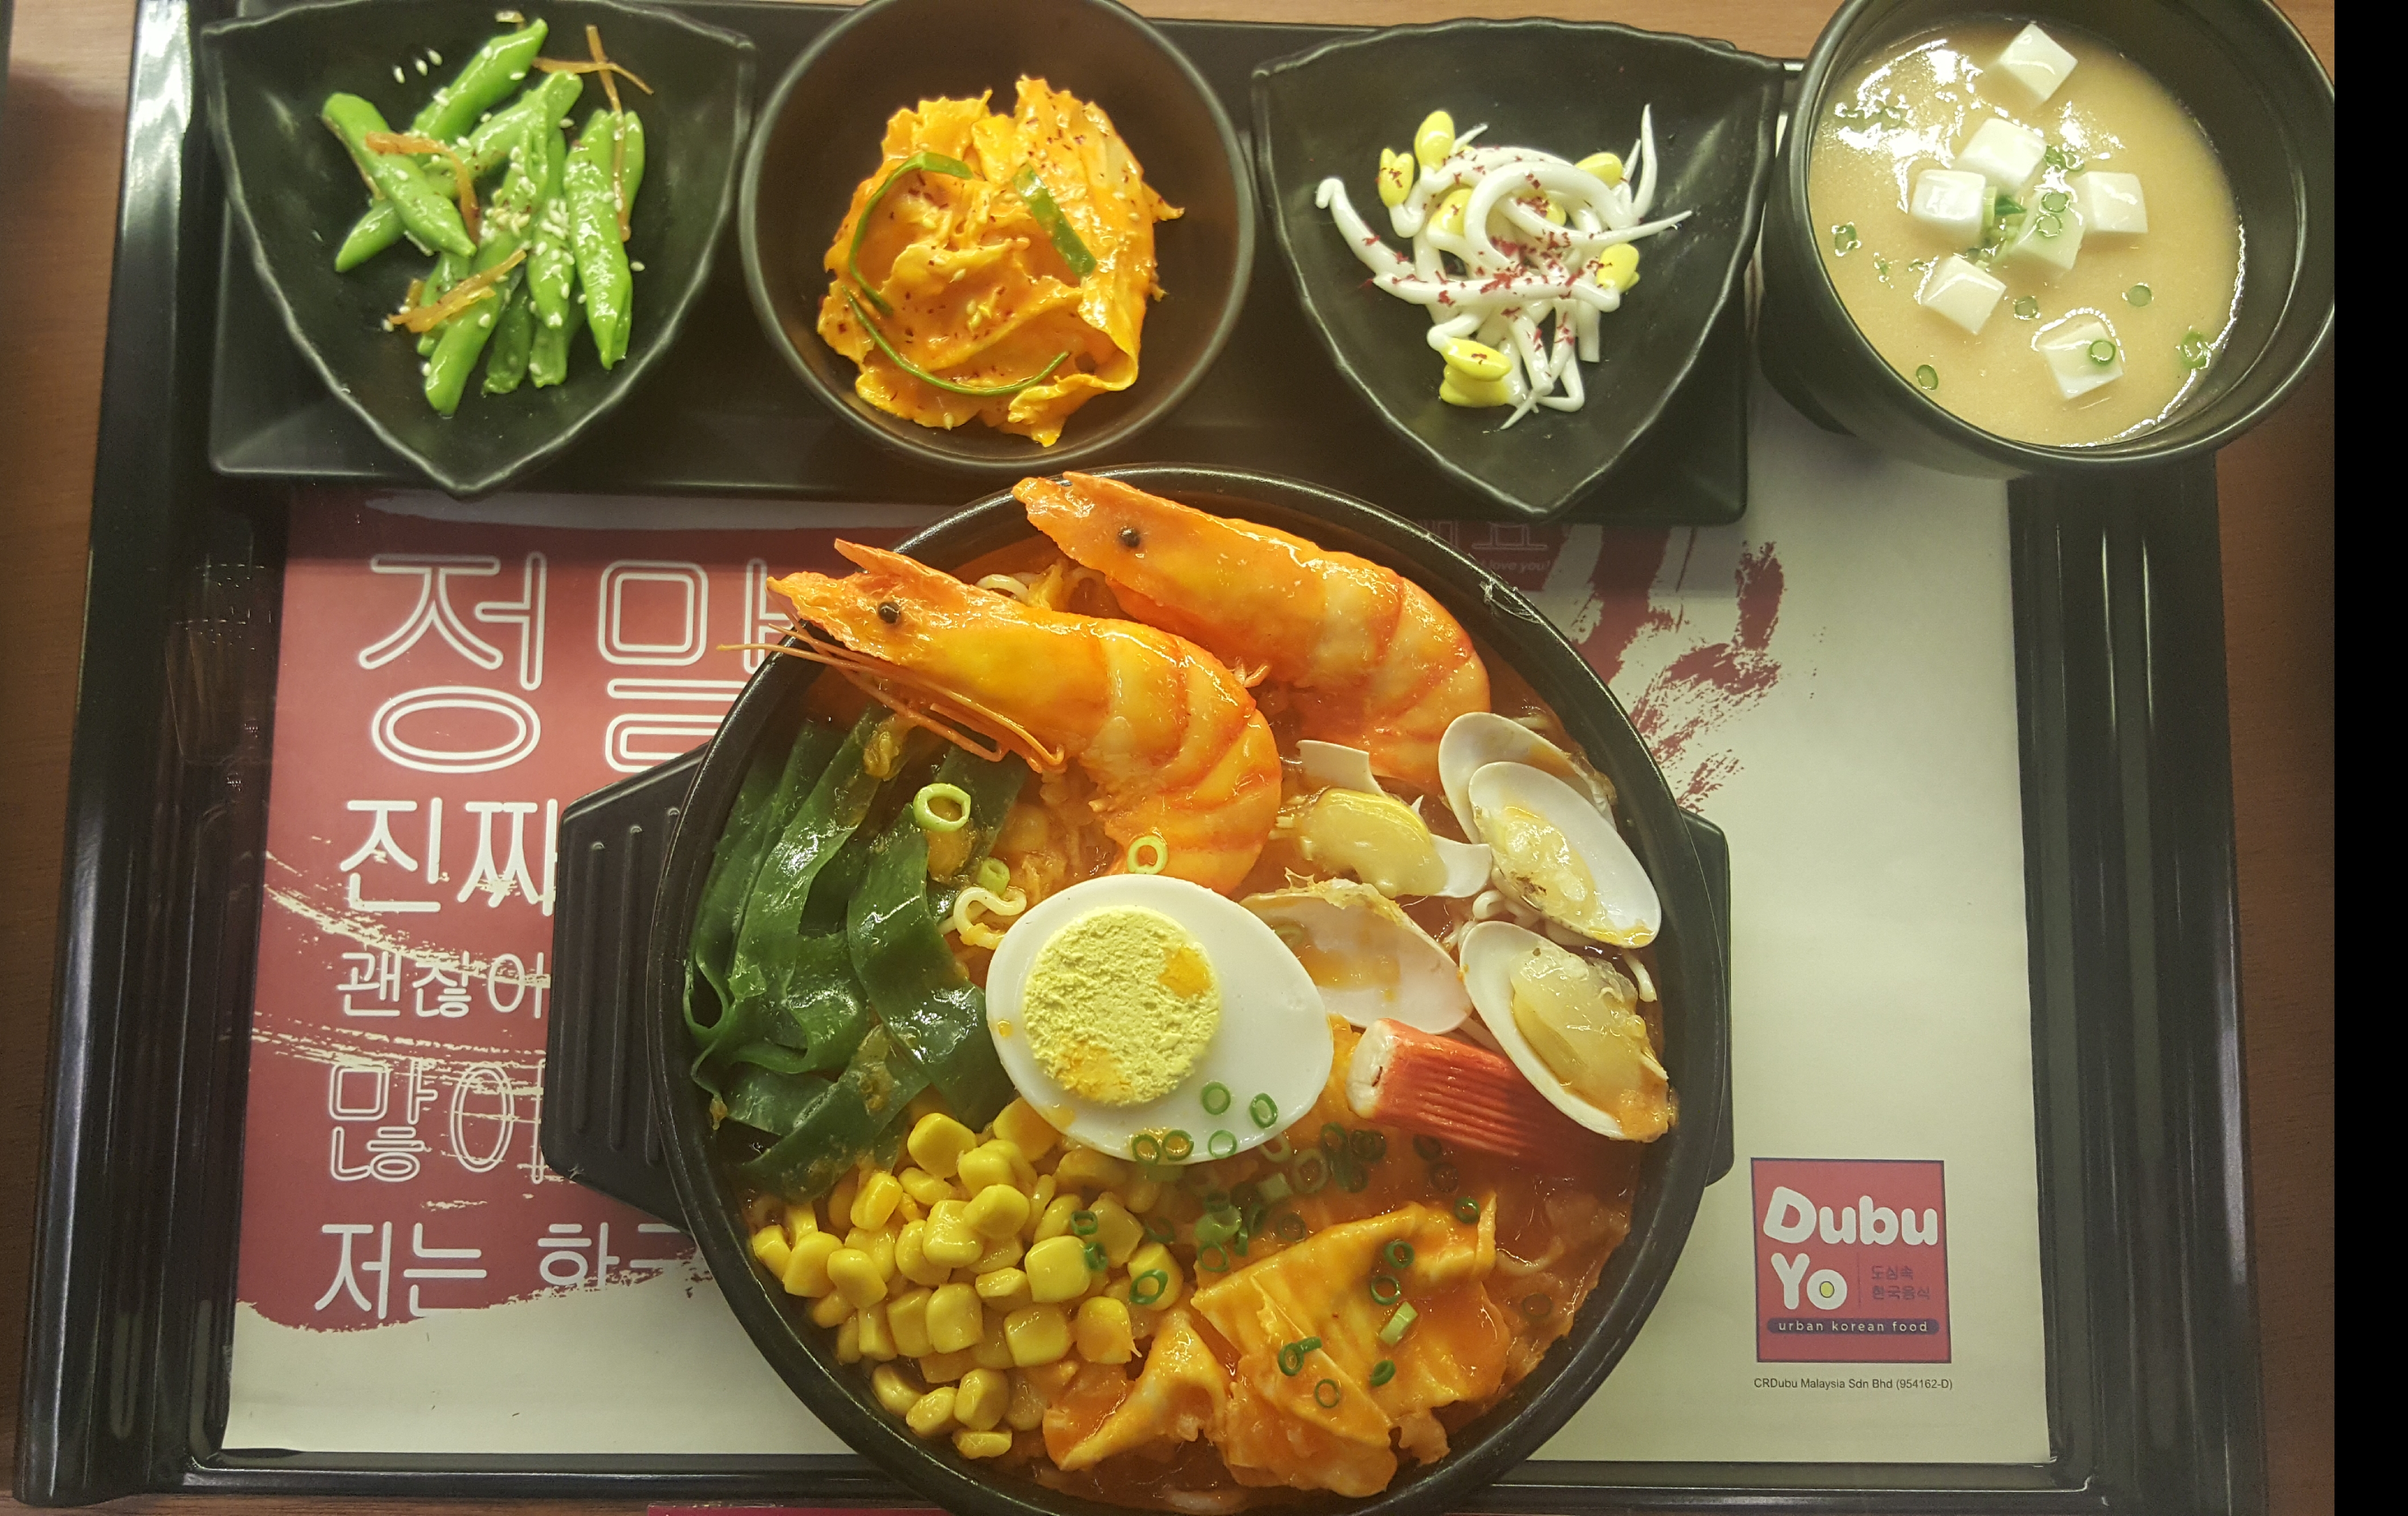 Dubuyo Restoren Makanan Korea Halal Lunastory Com